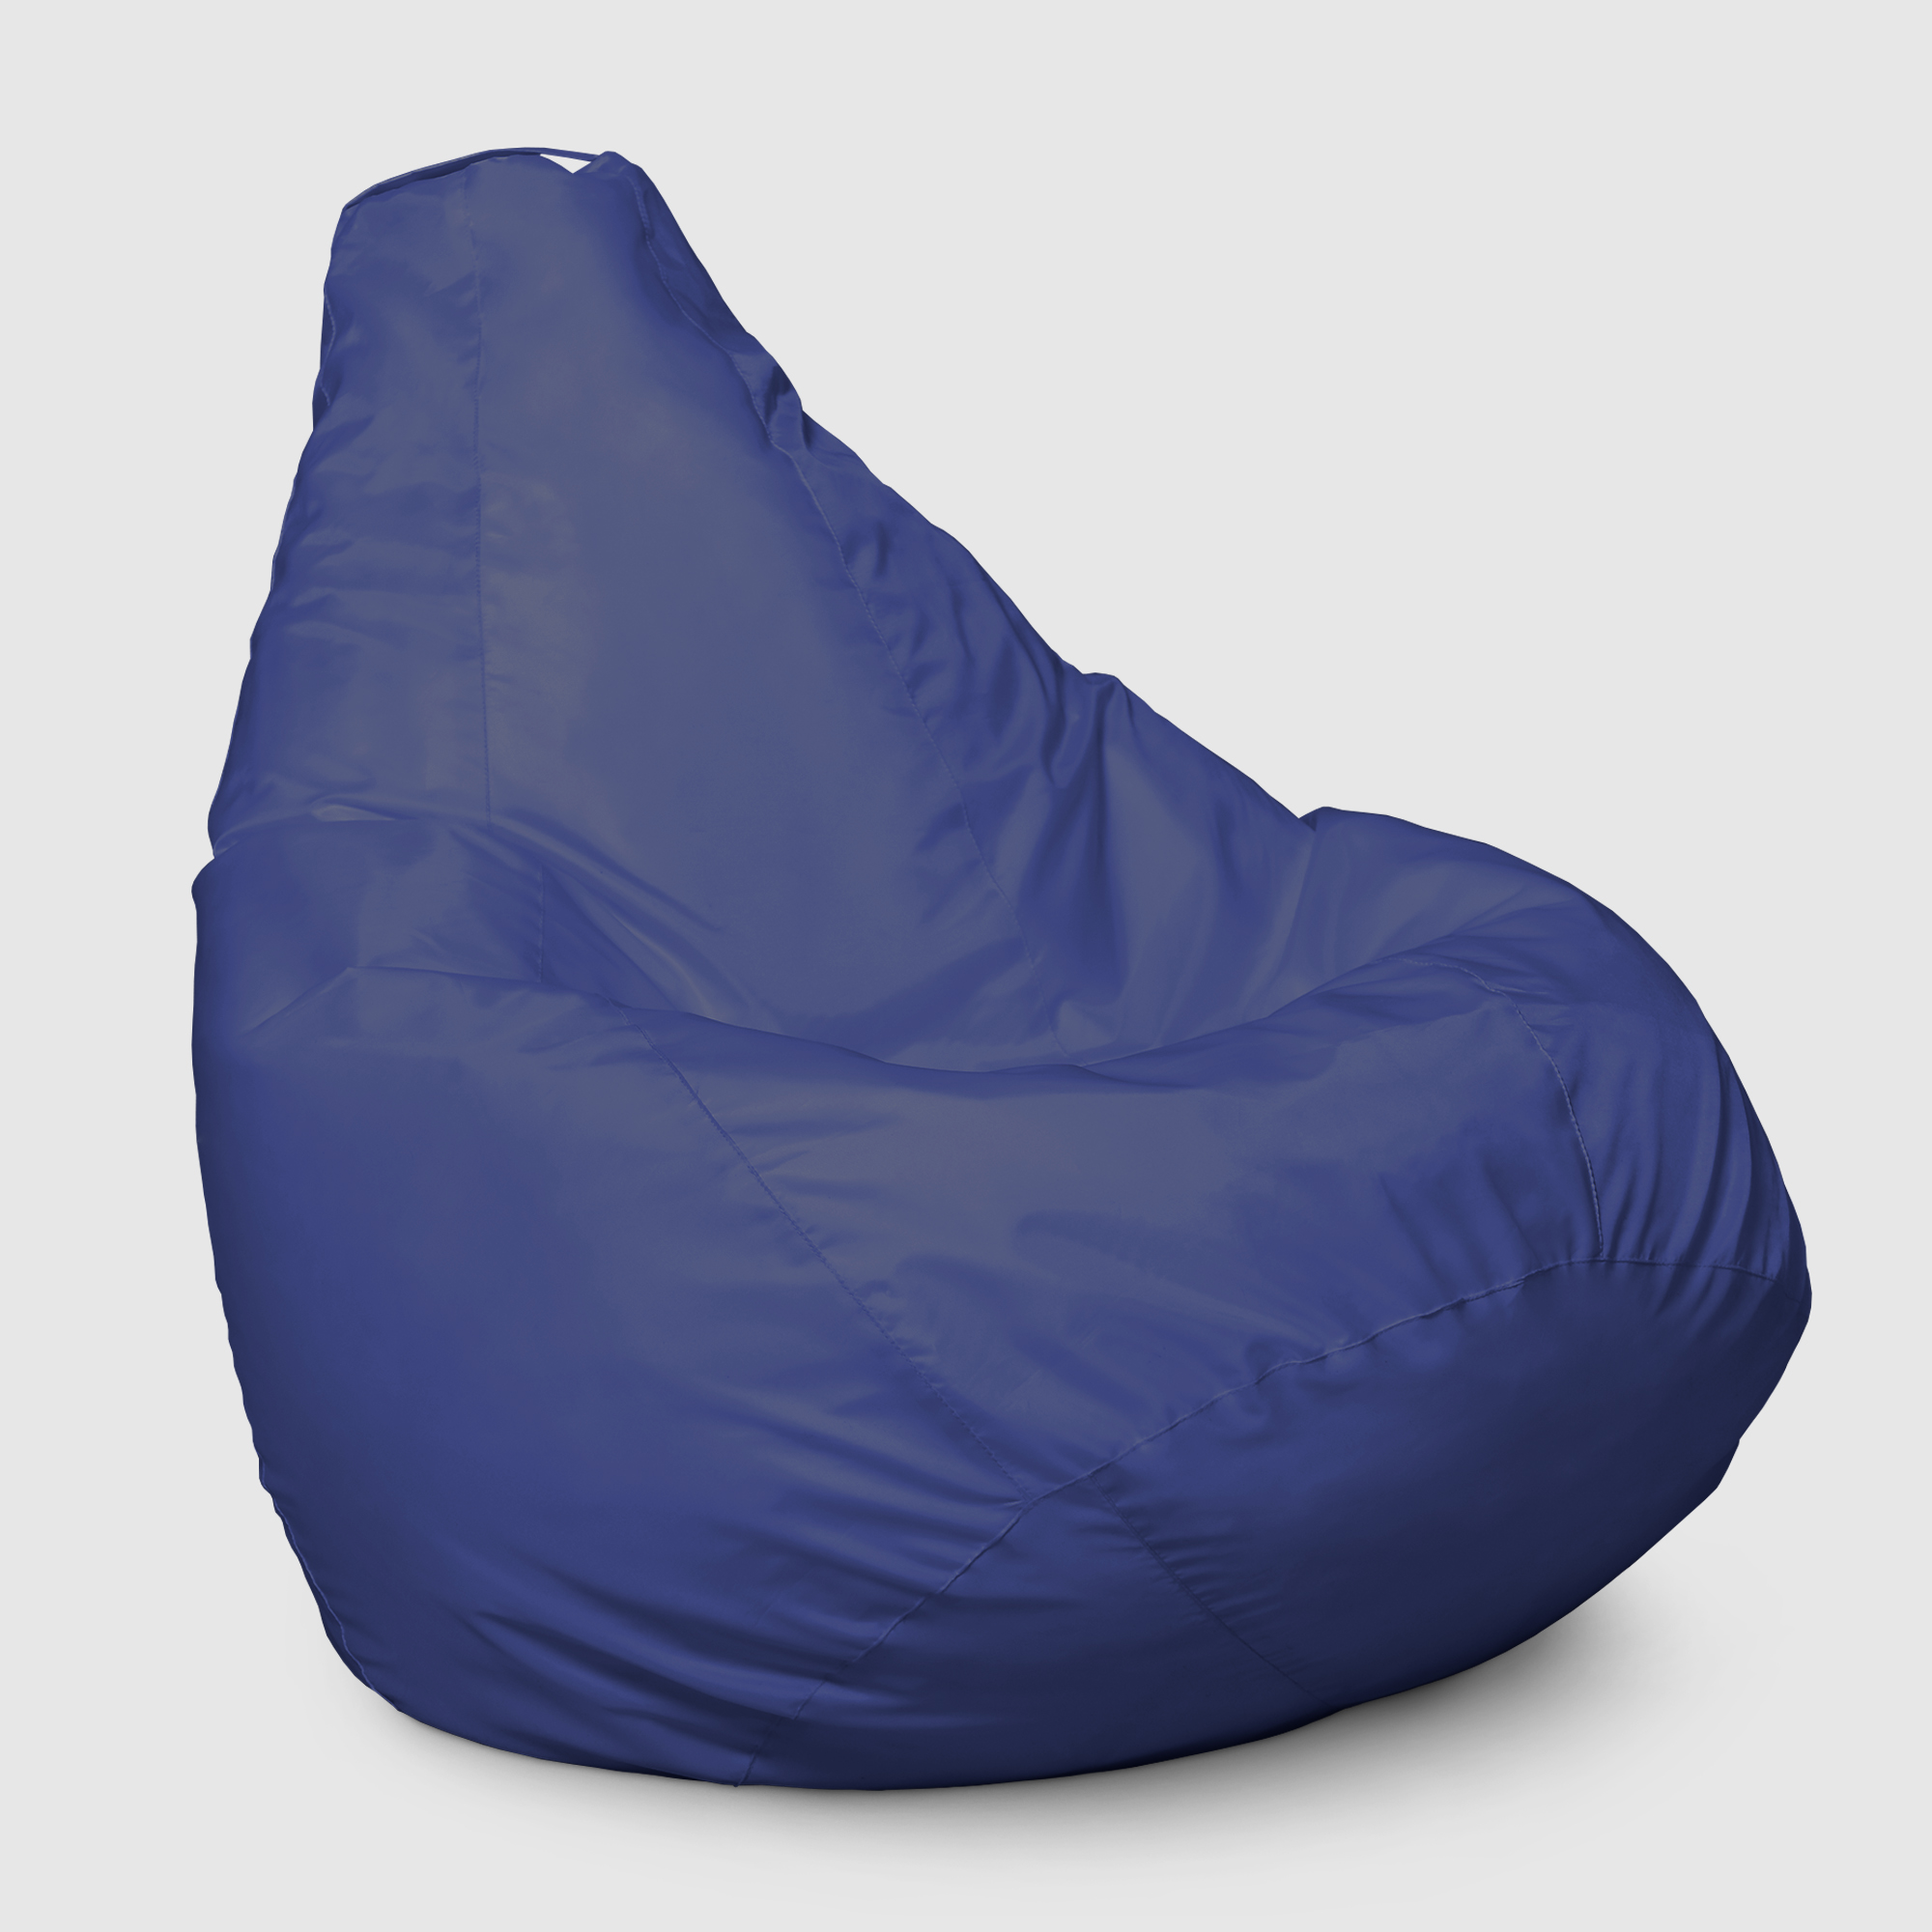 Кресло мешок Dreambag Меган xl темно-синее 85х85х125 см кресло мешок dreambag меган xl оранжевое 85х85х125см